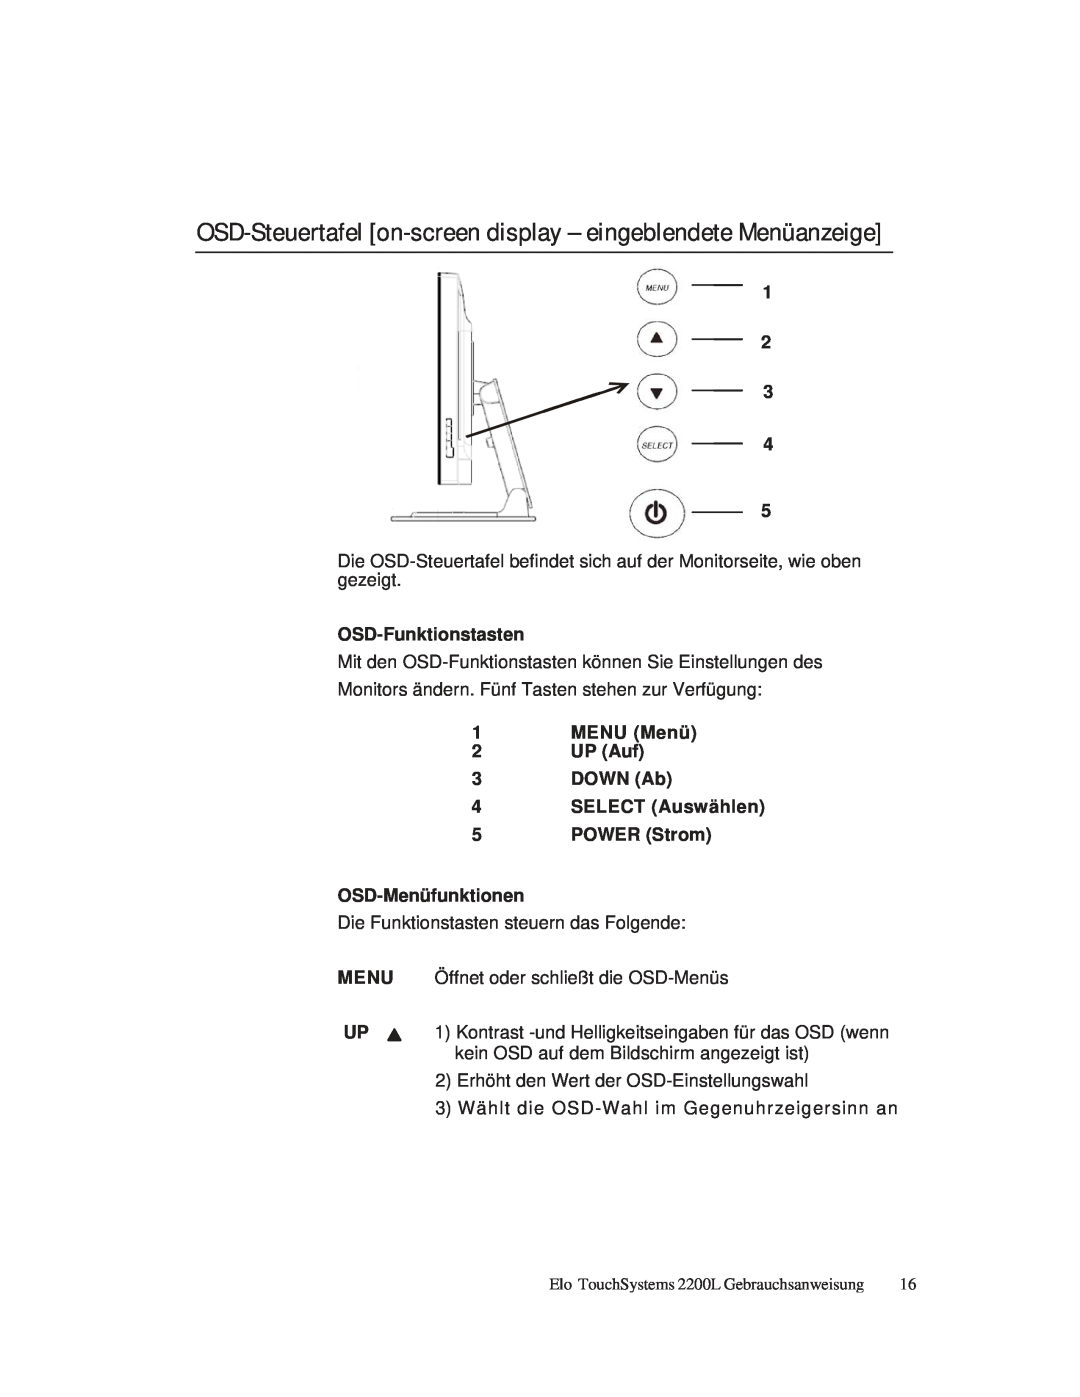 Elo TouchSystems ET2200L manual OSD-Steuertafel on-screen display - eingeblendete Menüanzeige, OSD-Funktionstasten 